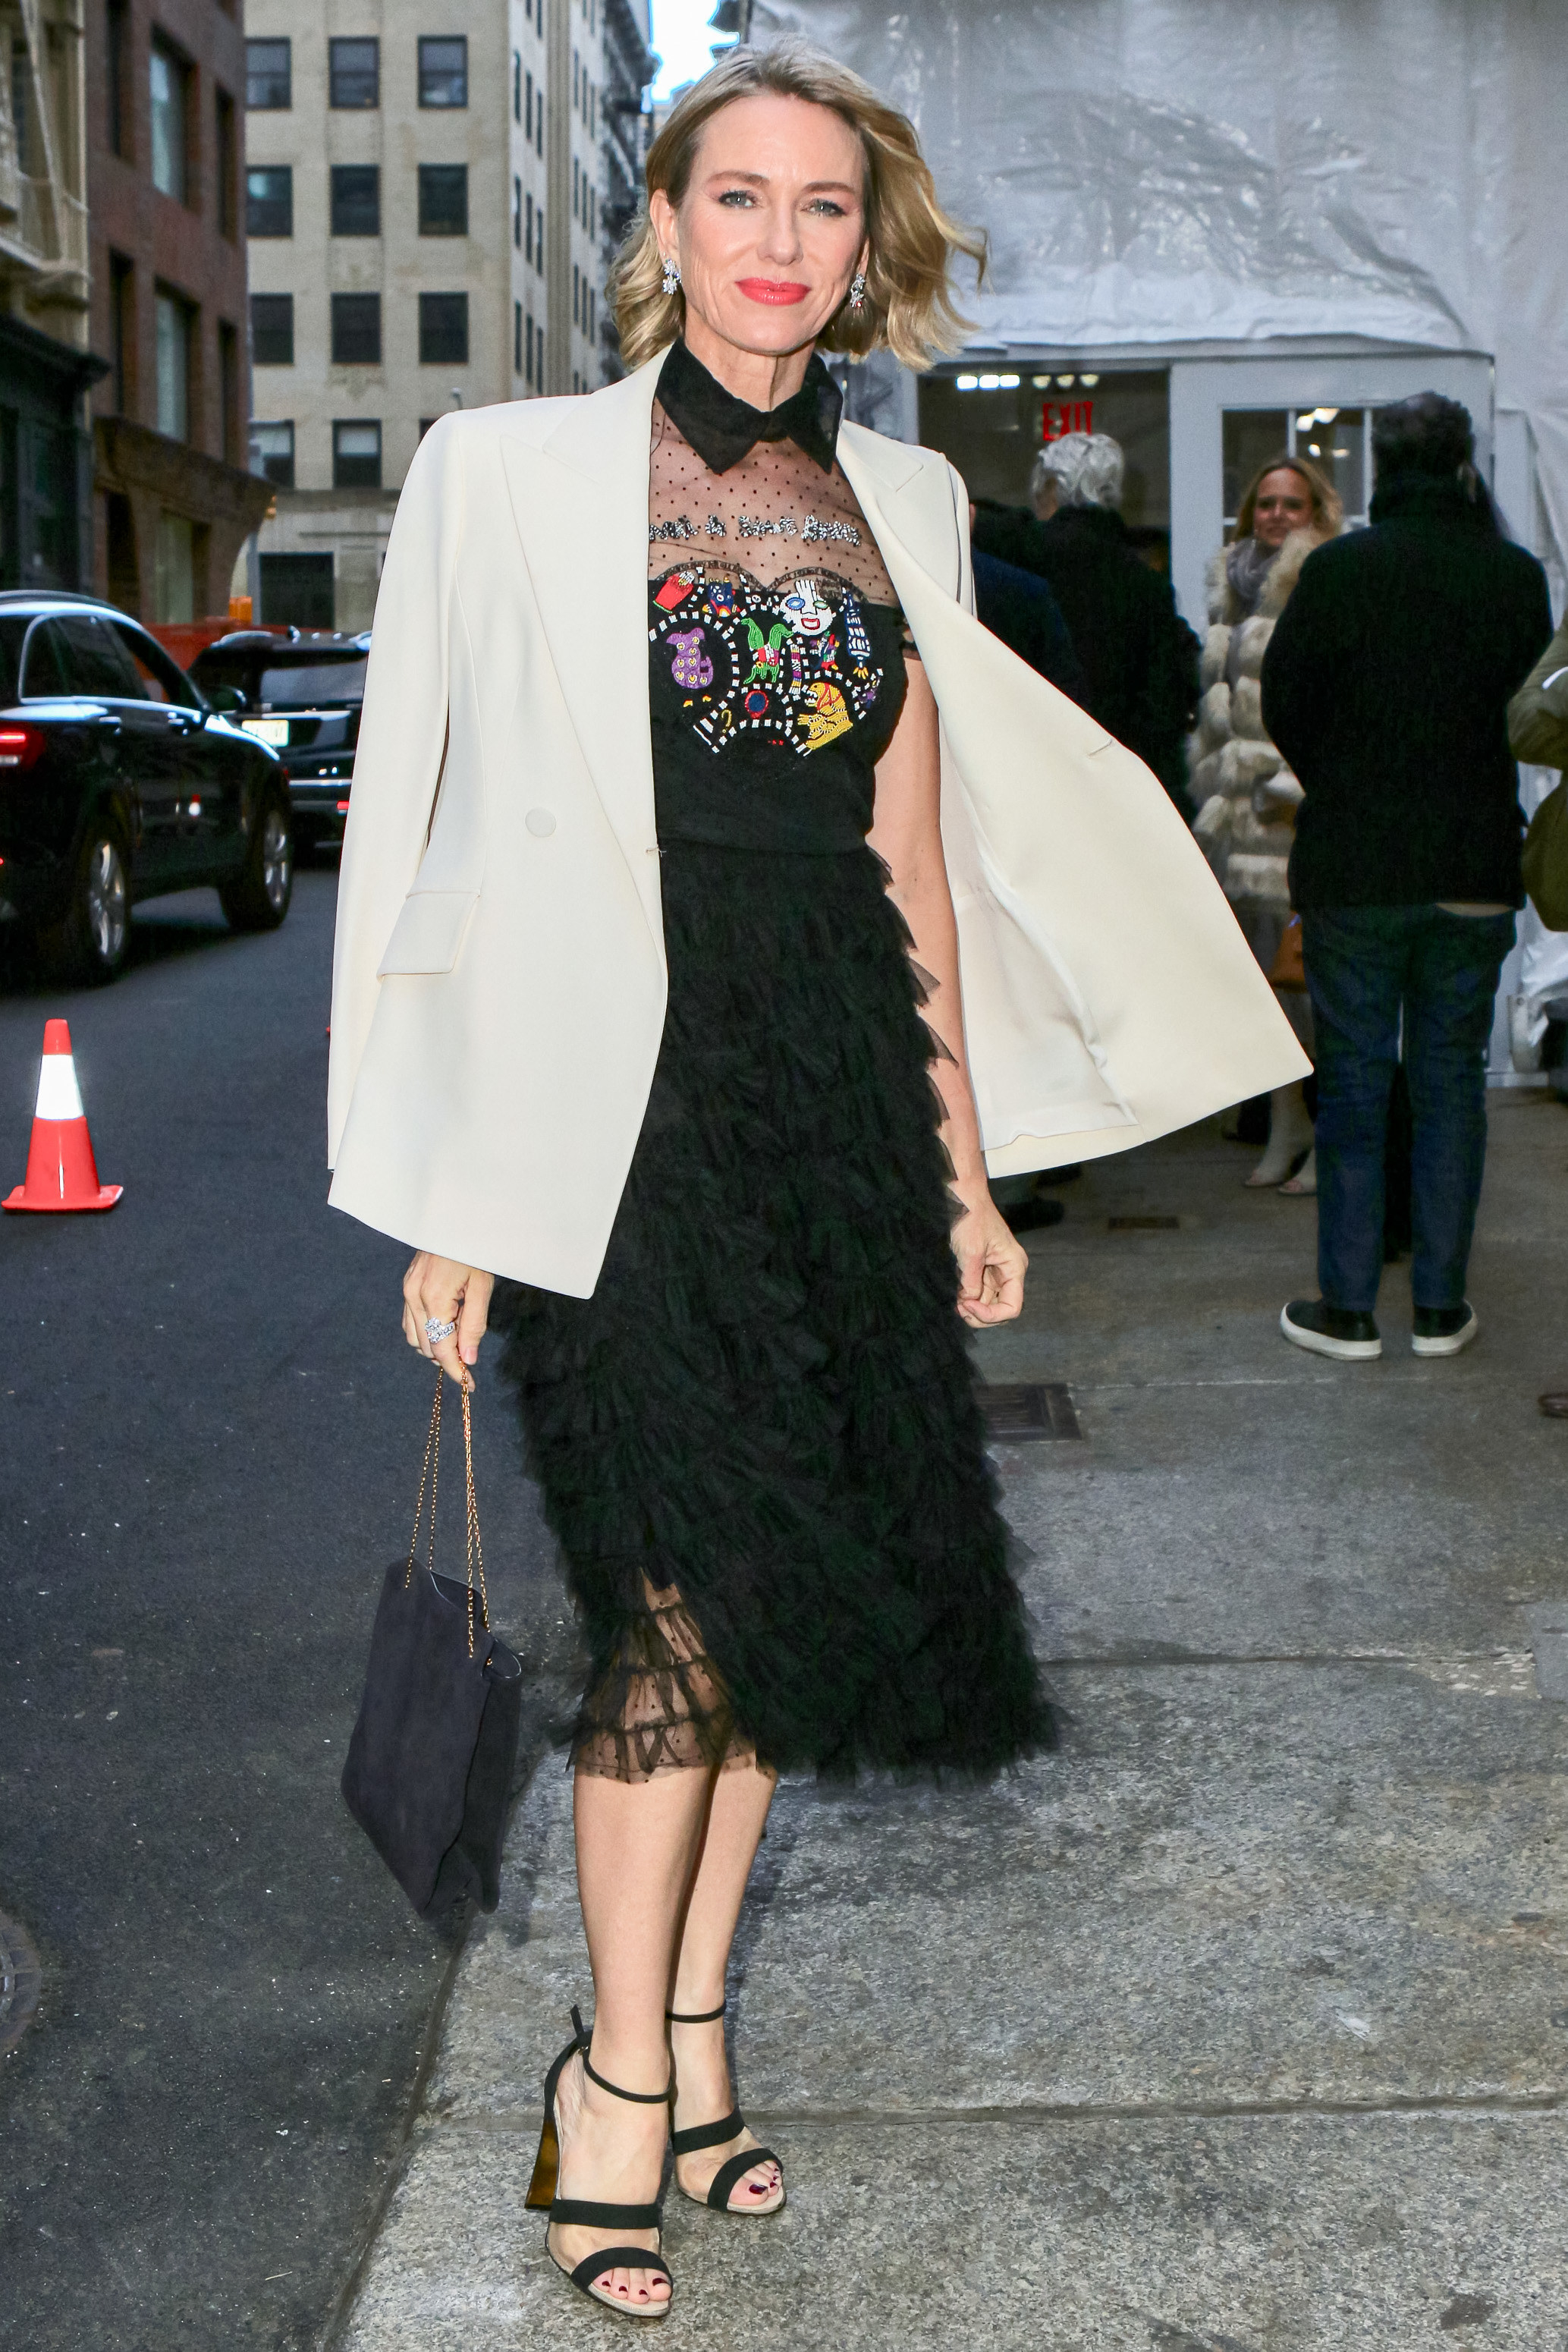 Naomi posing in a dress and blazer on the sidewalk